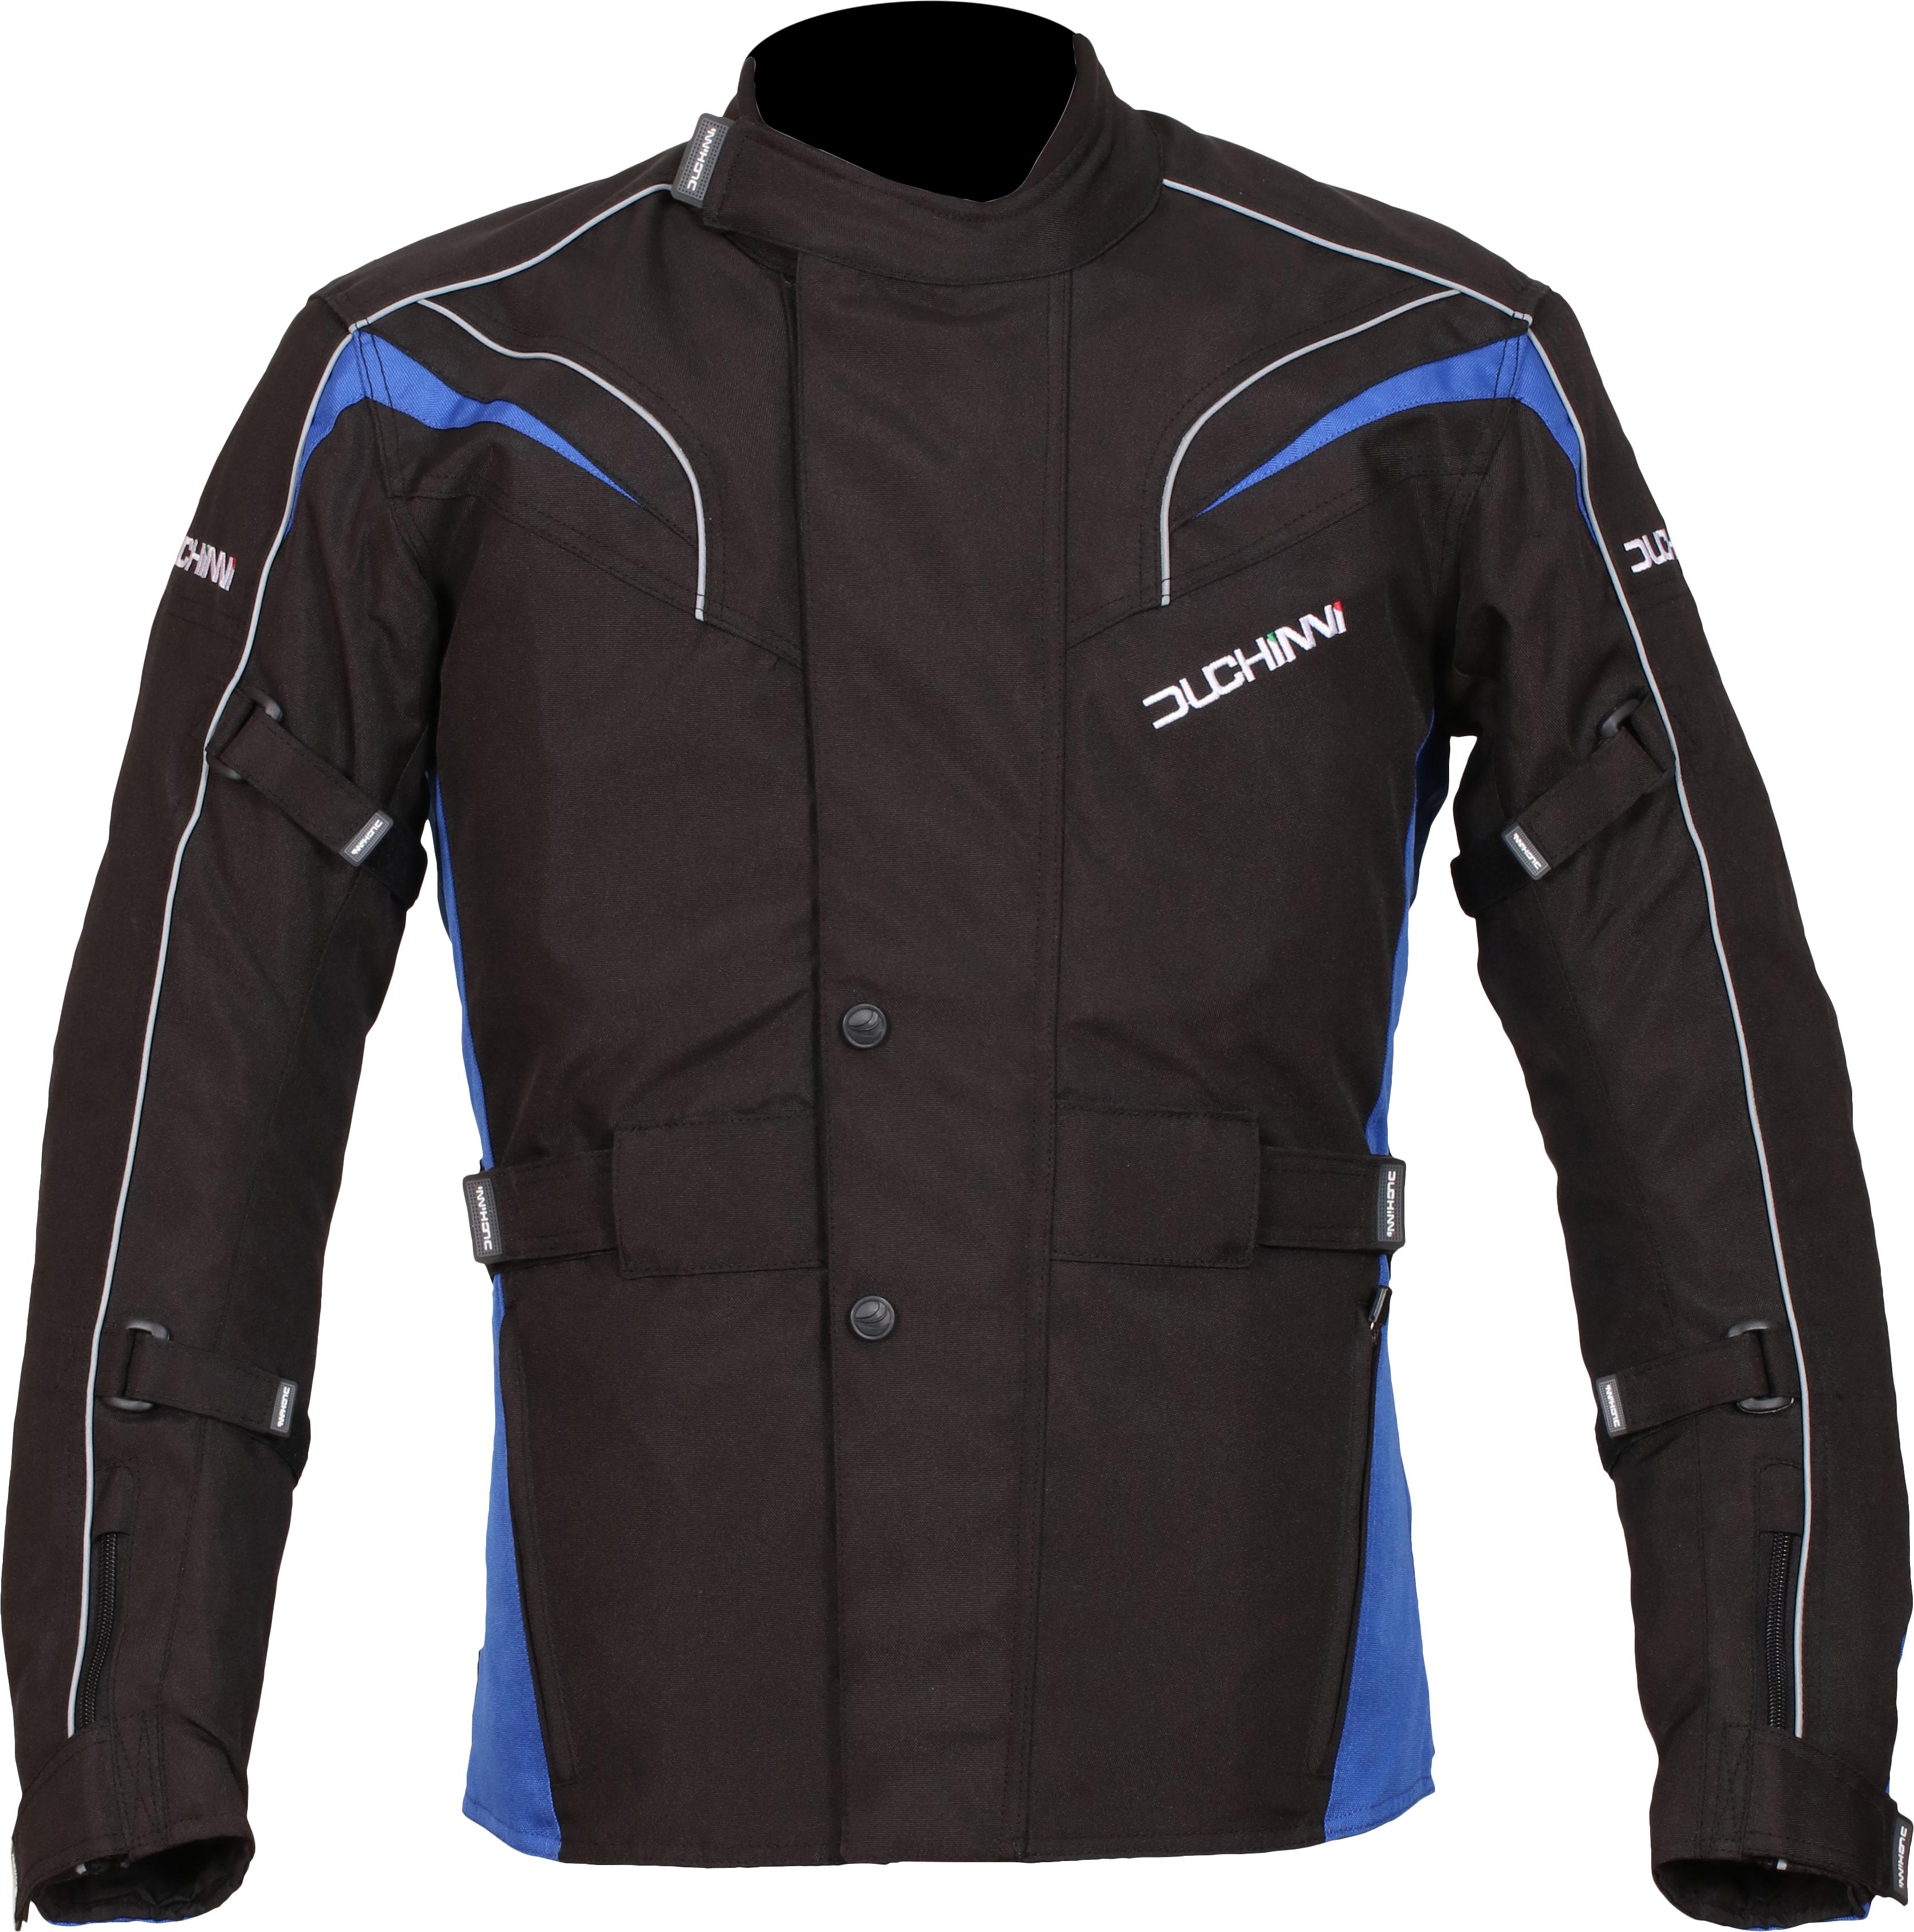 Duchinni Hurricane Motorcycle Jacket - Black And Blue, L